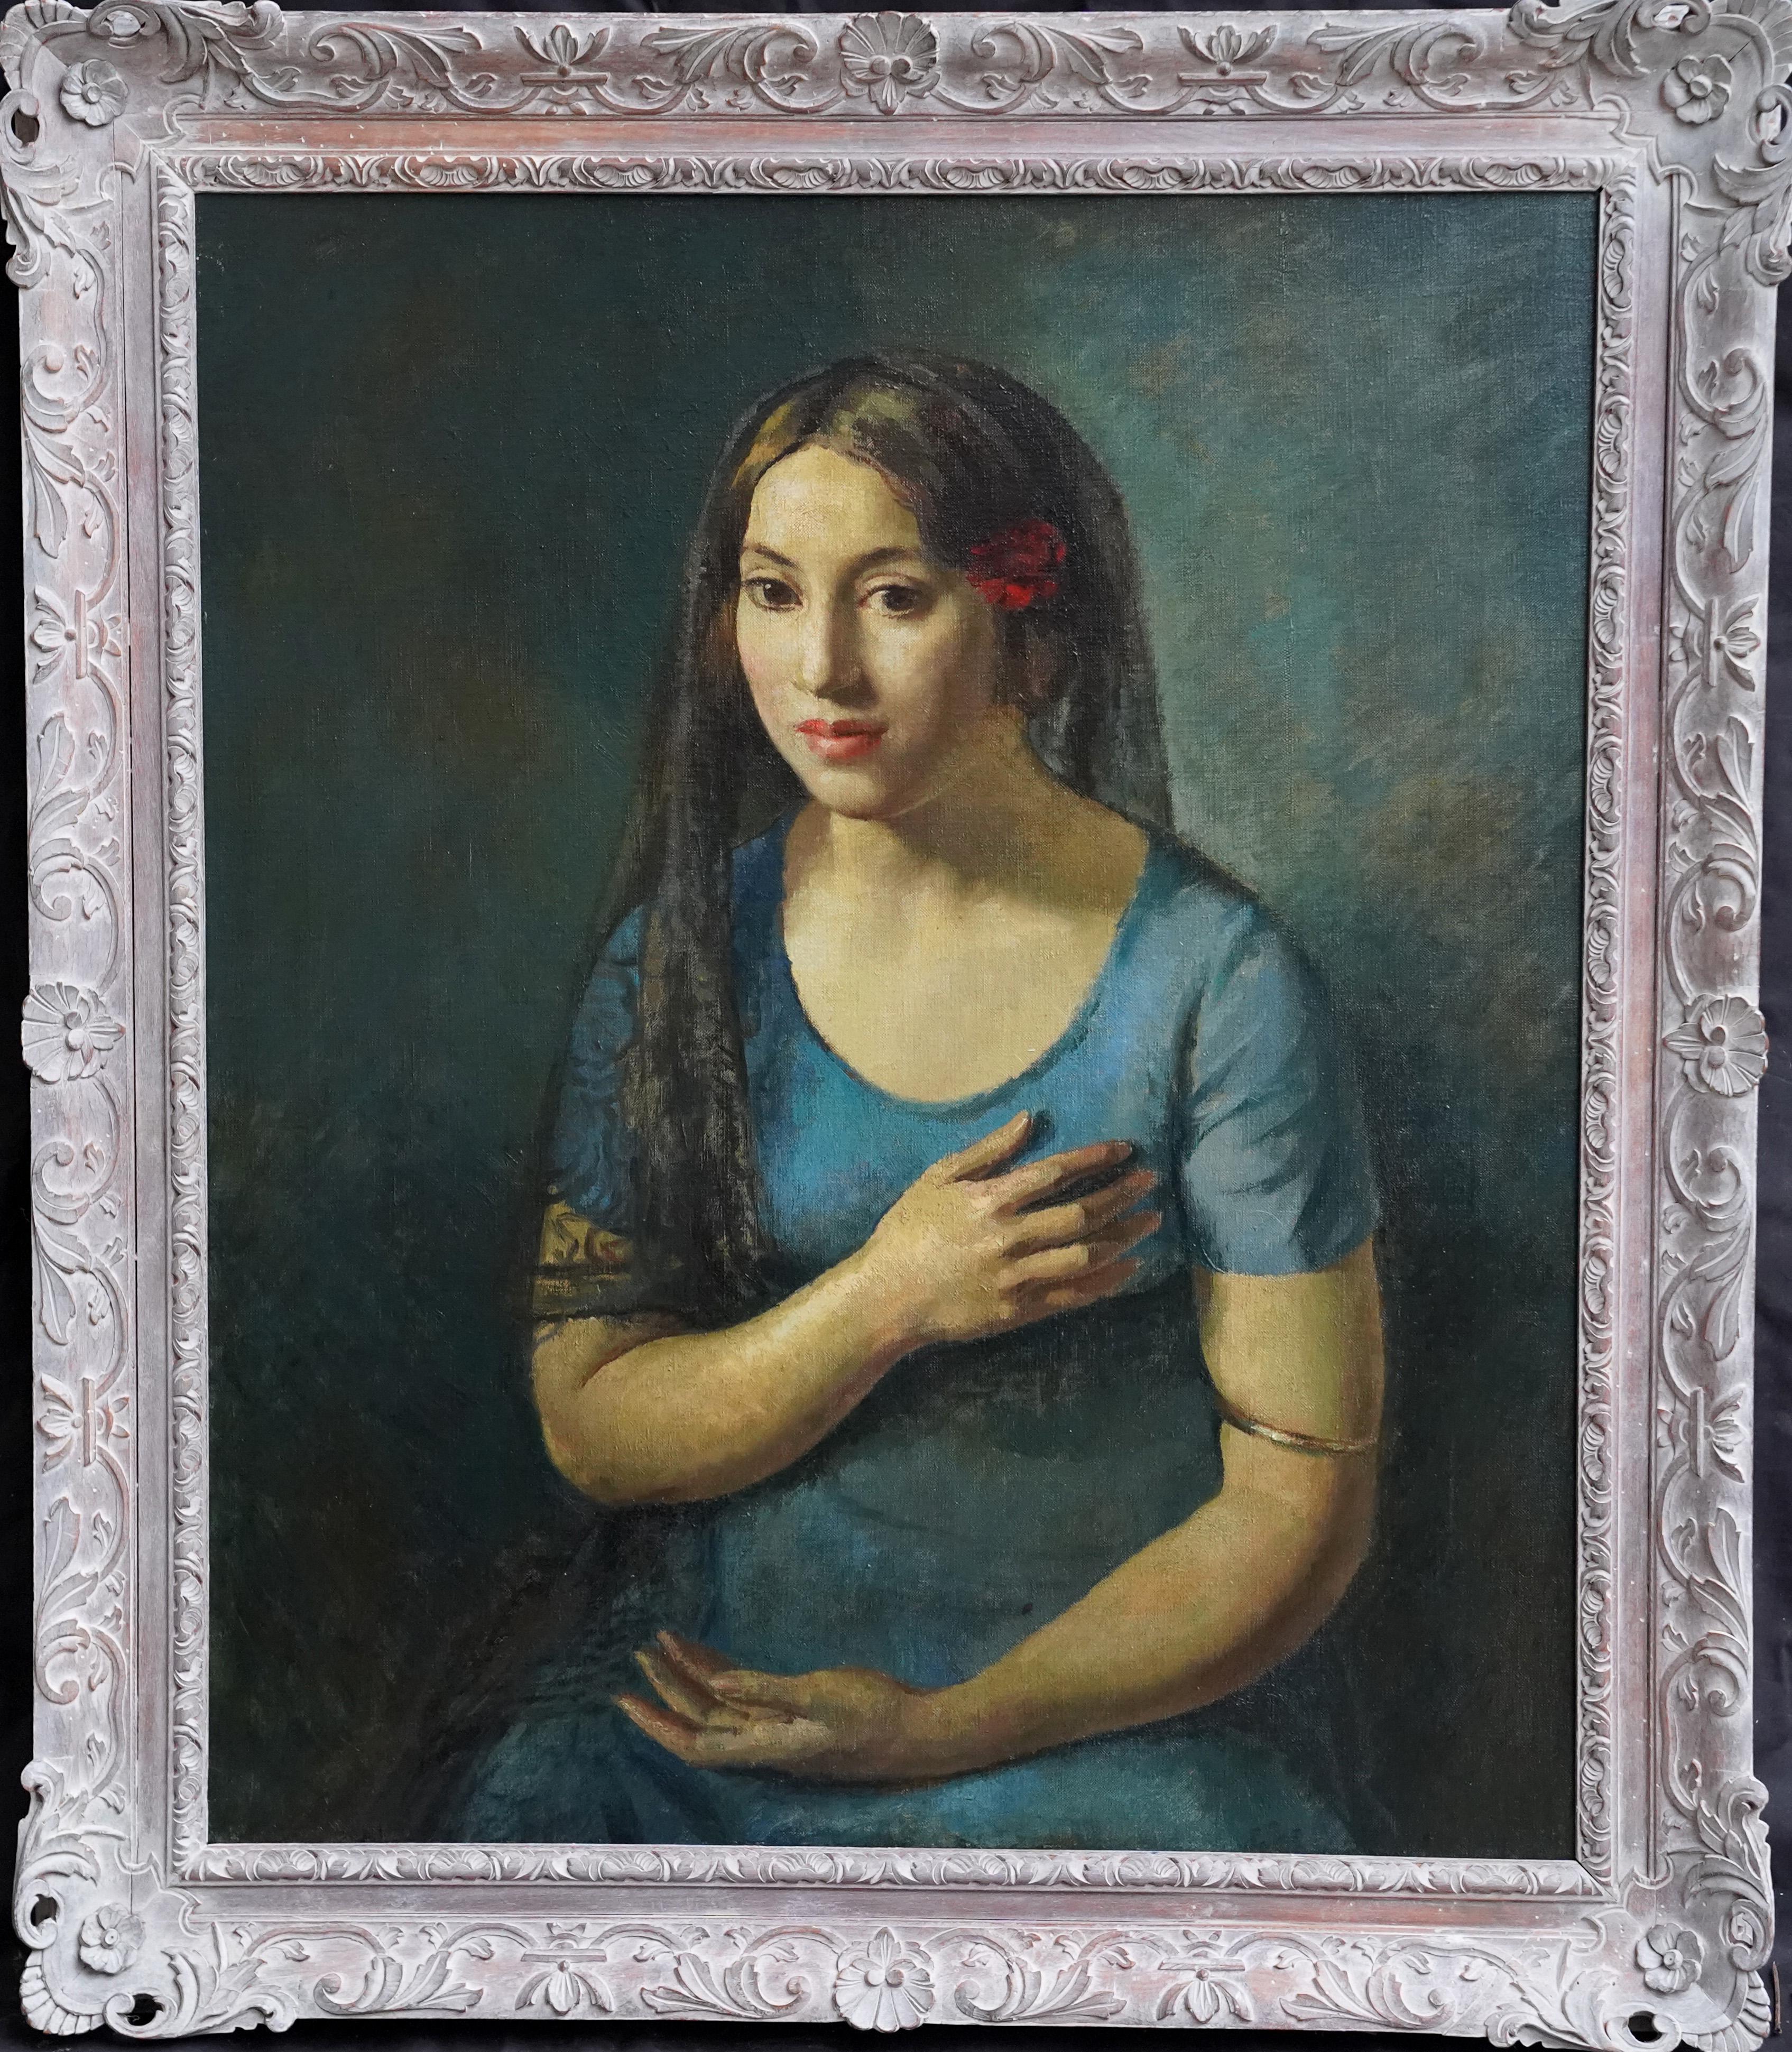 Lionel Ellis Portrait Painting - Portrait of a Seated Girl in Blue - British 1930's art portrait oil painting